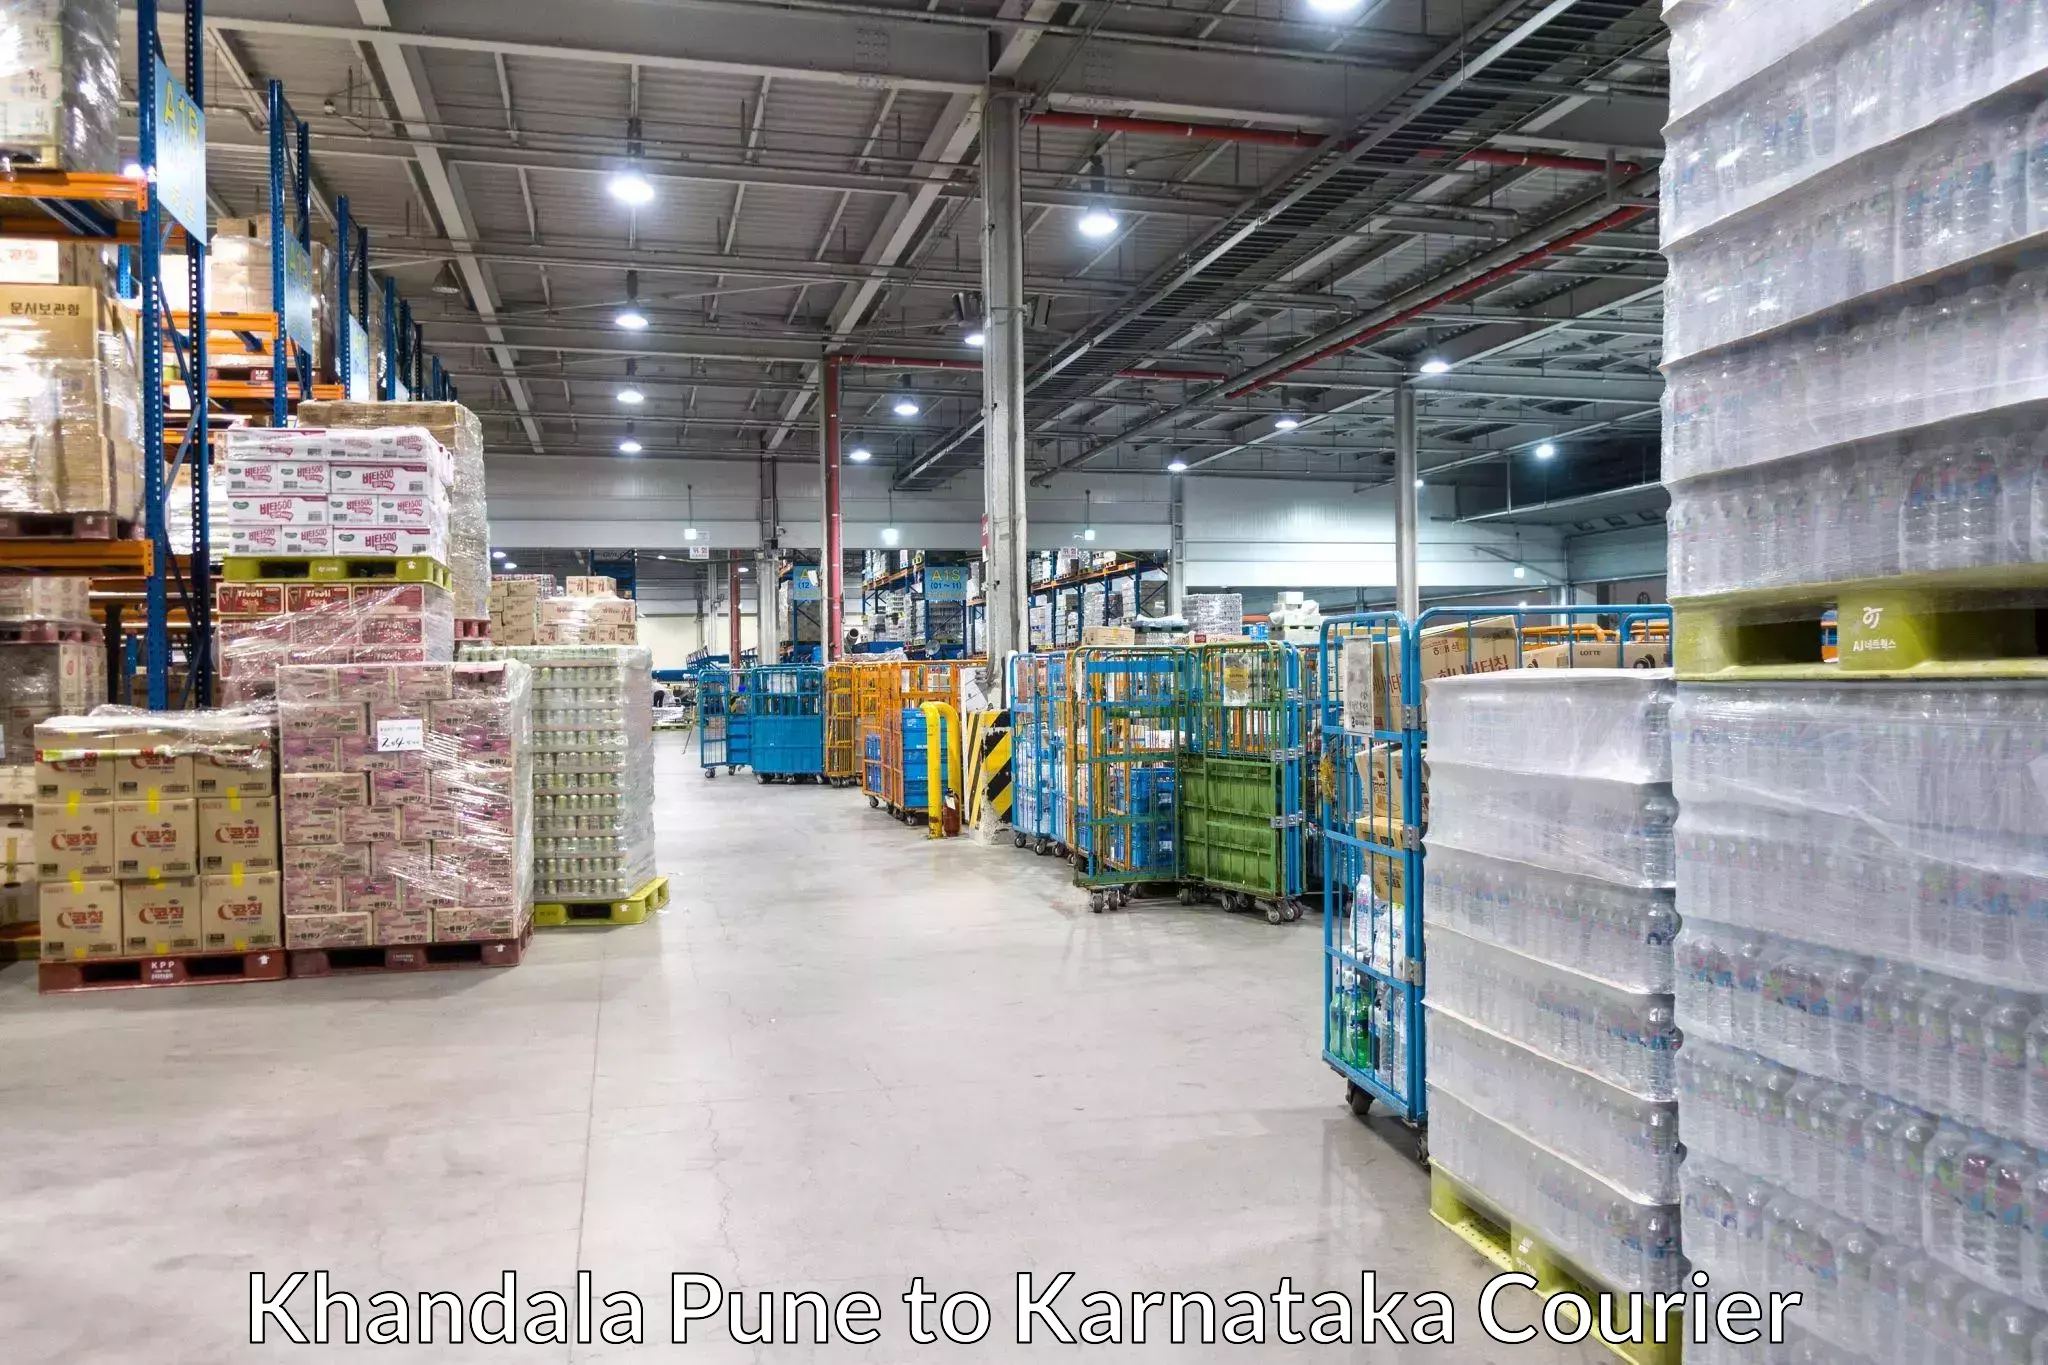 High-performance logistics Khandala Pune to Yellare